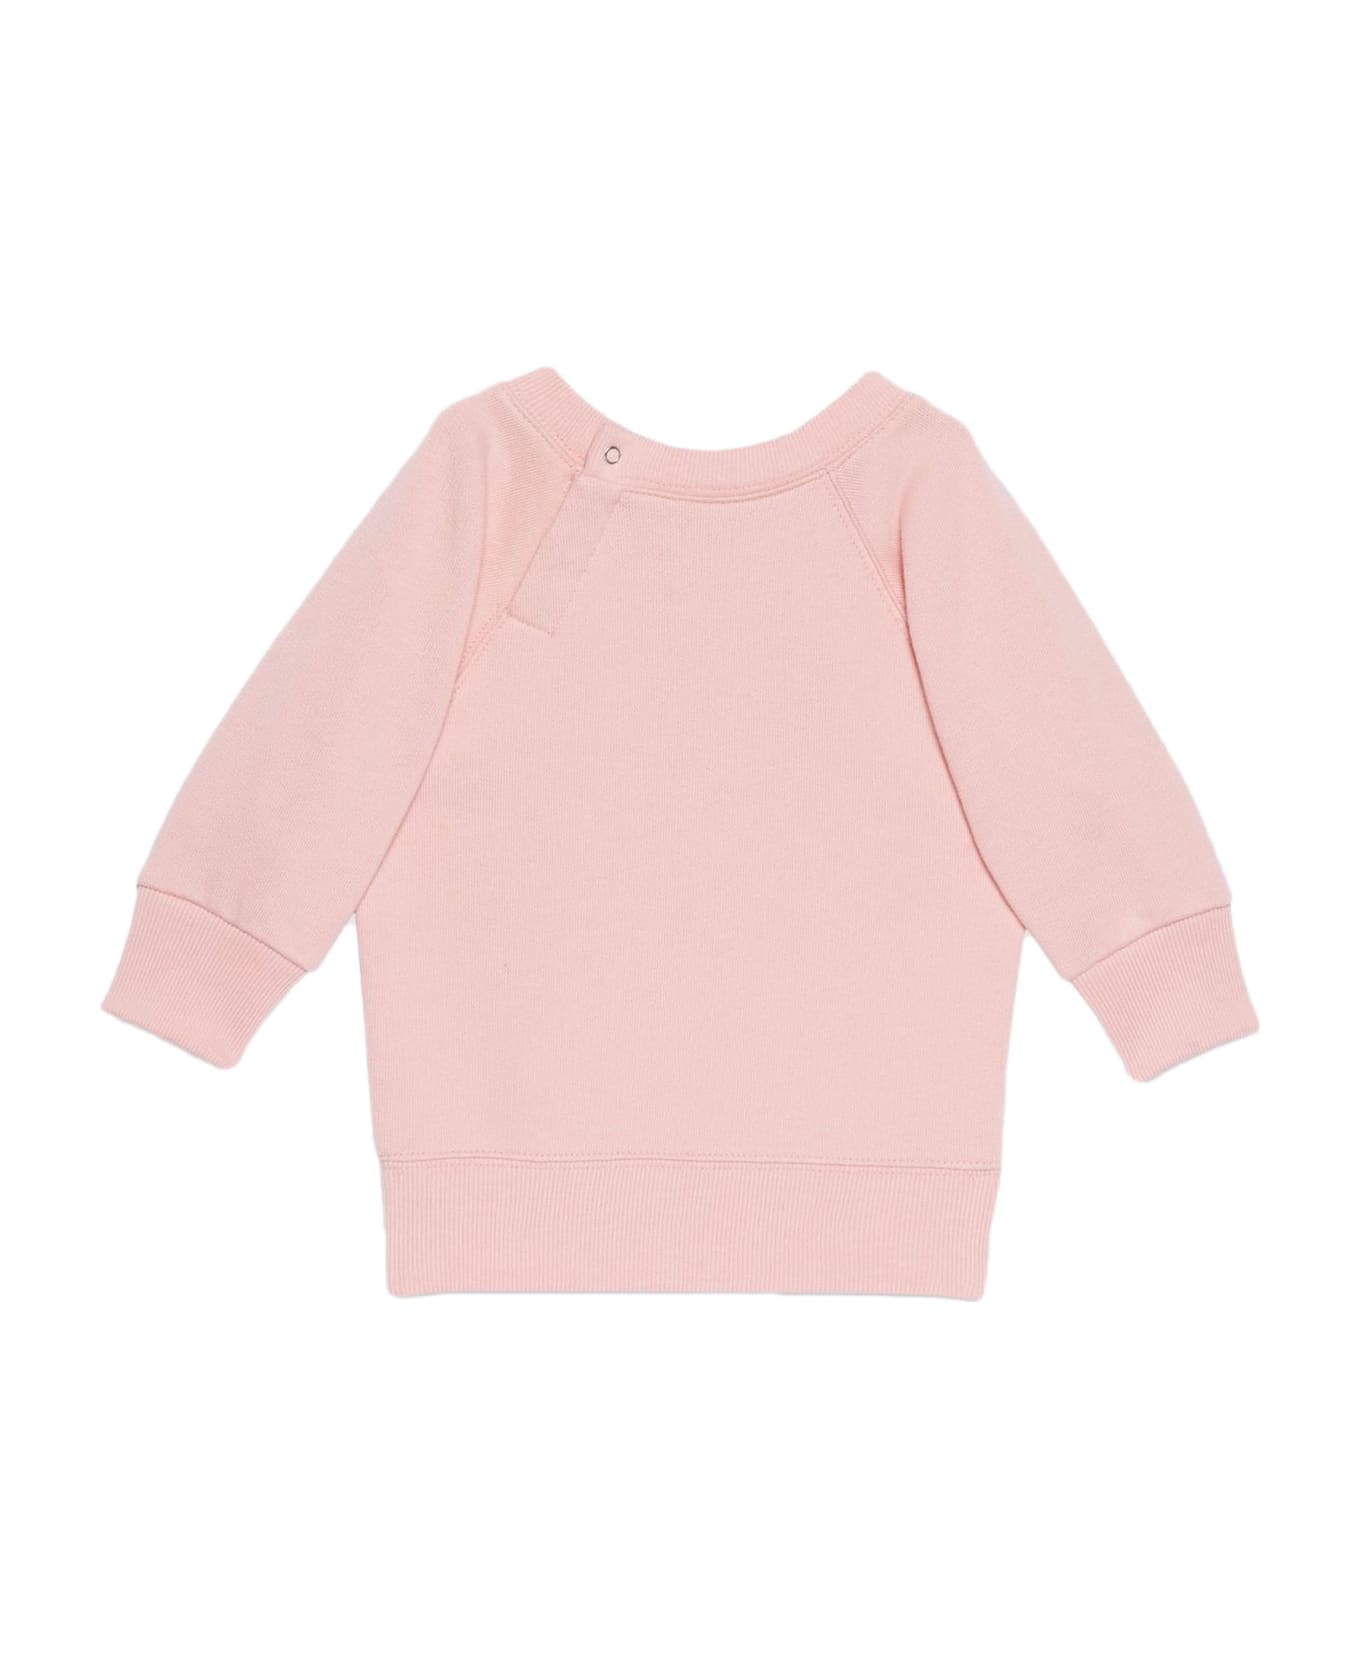 Gucci Kids Sweaters Pink - Pink